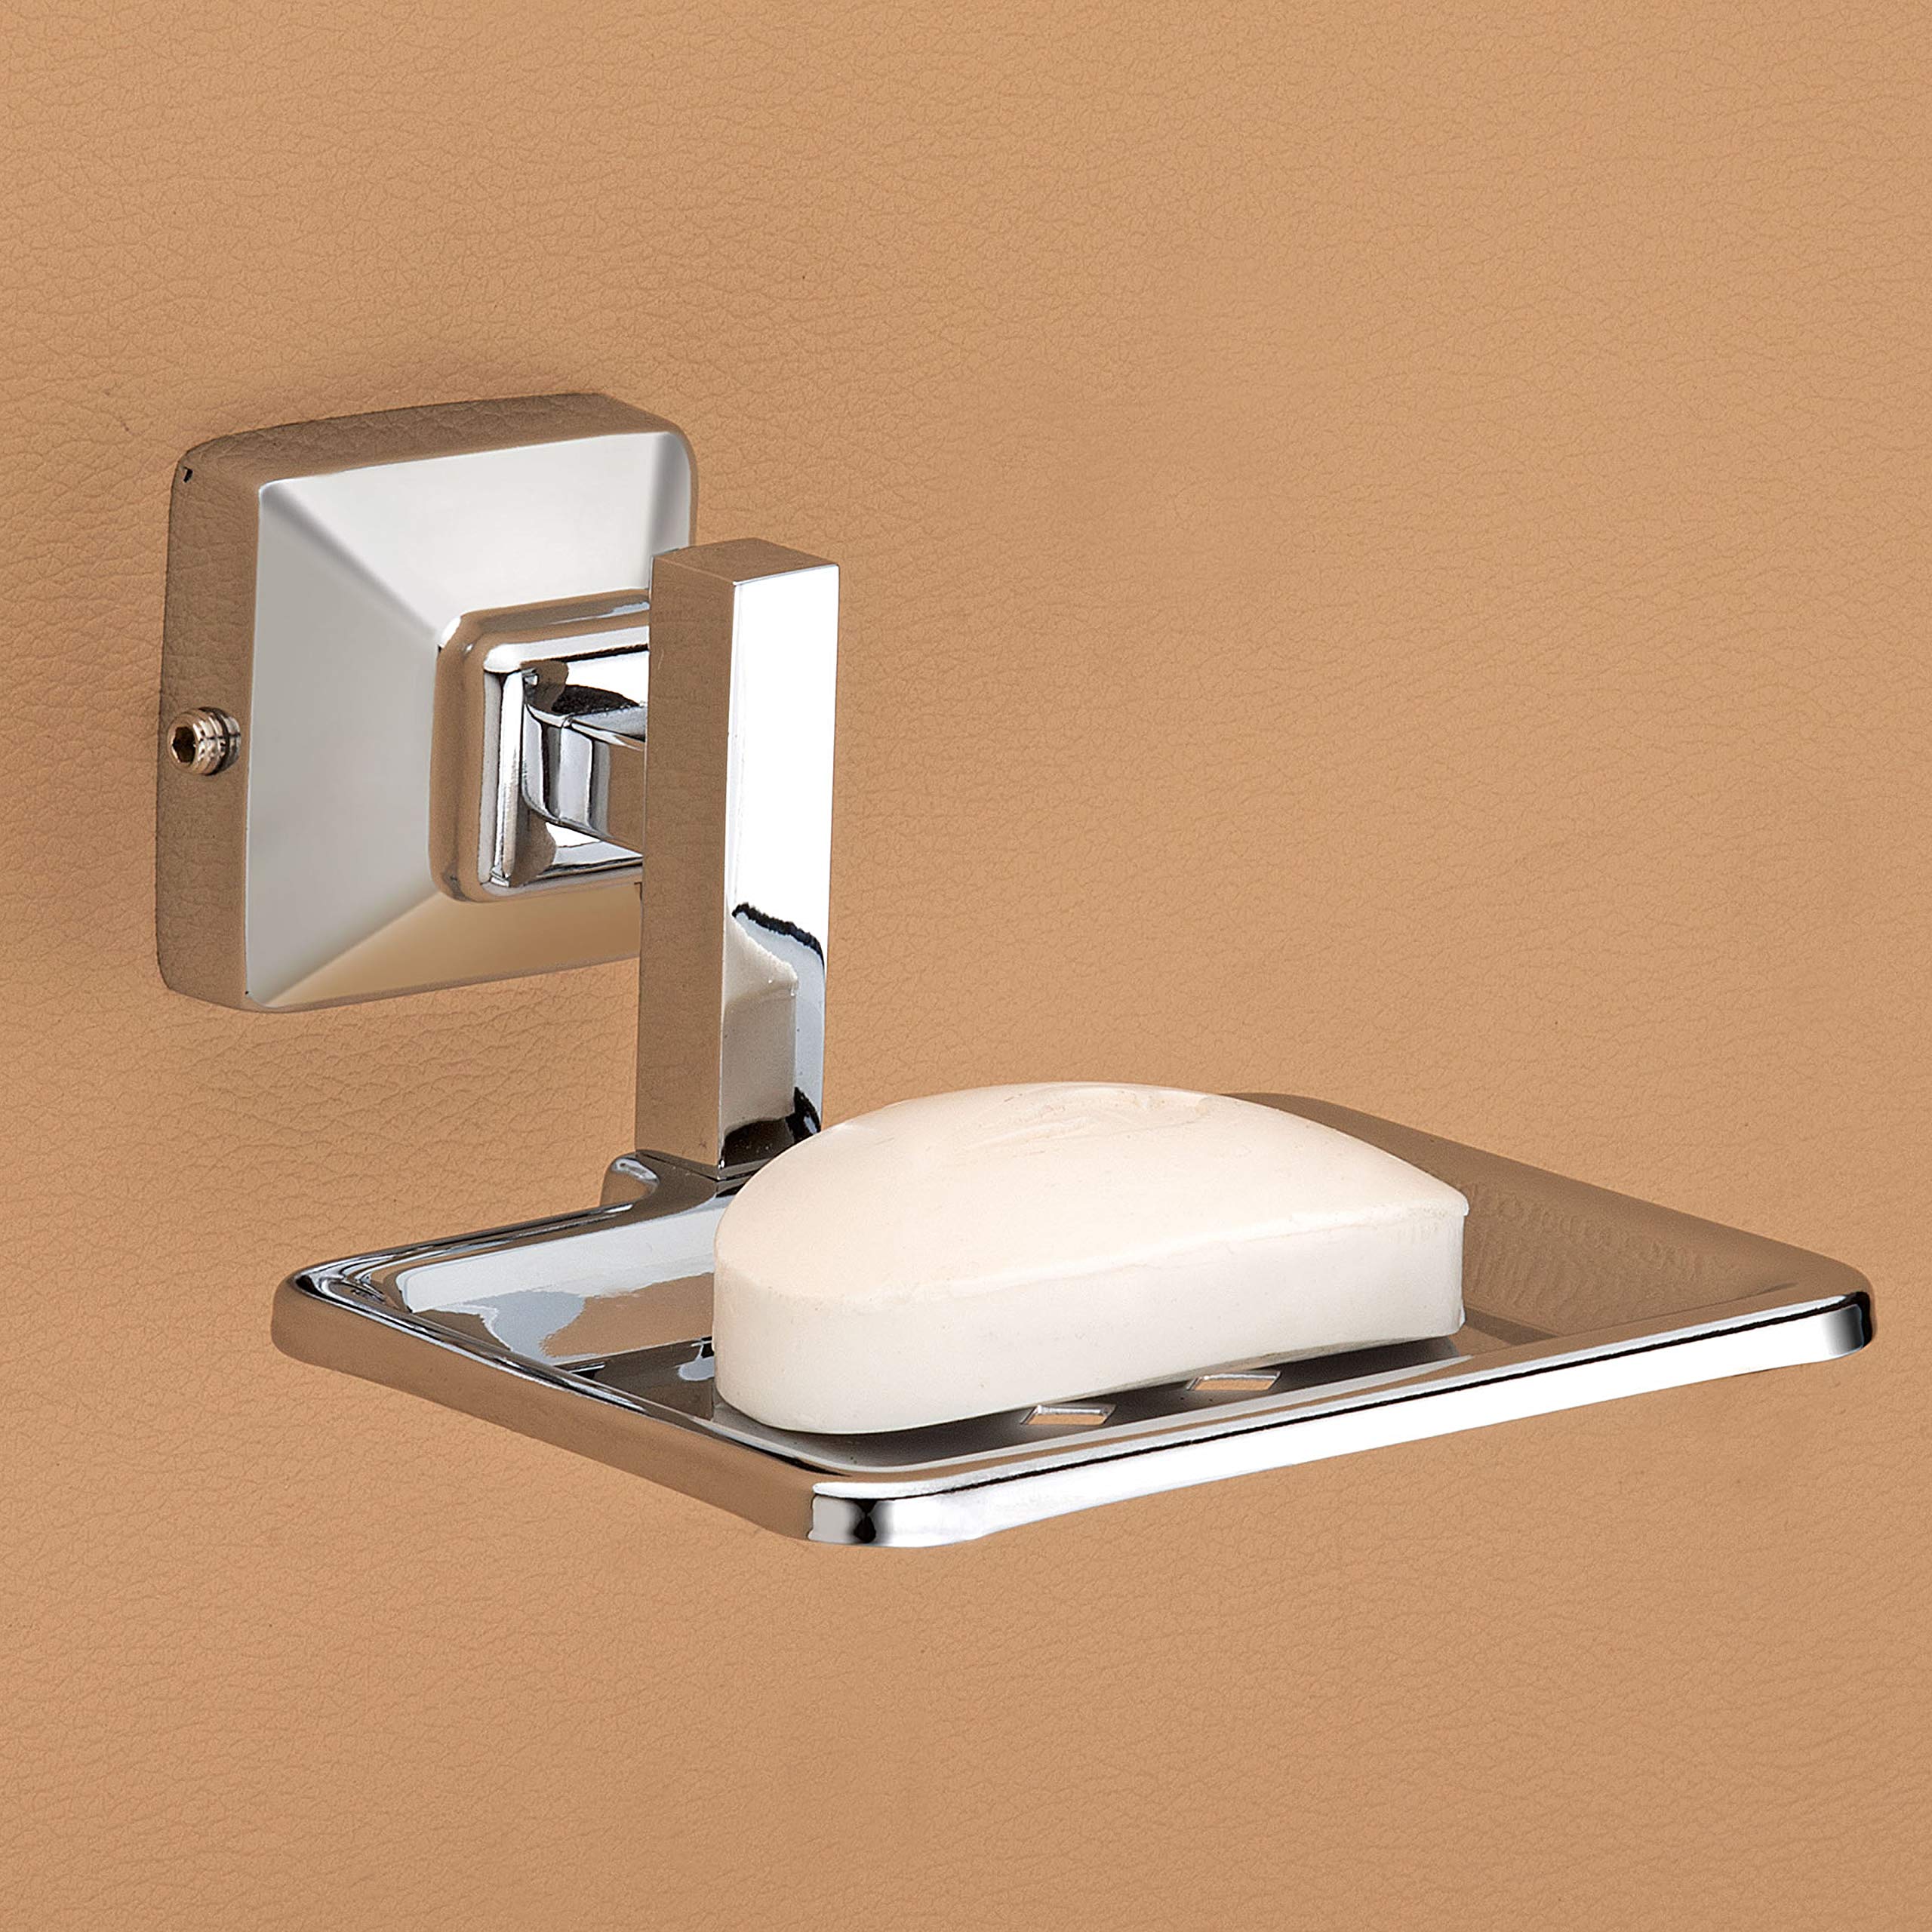 Plantex Stainless Steel 304 Grade Bathroom Accessories Set / Bathroom Hanger for Towel / Towel Bar / Napkin Ring / Tumbler Holder / Soap Dish / Robe Hook (Squaro - Pack of 10)